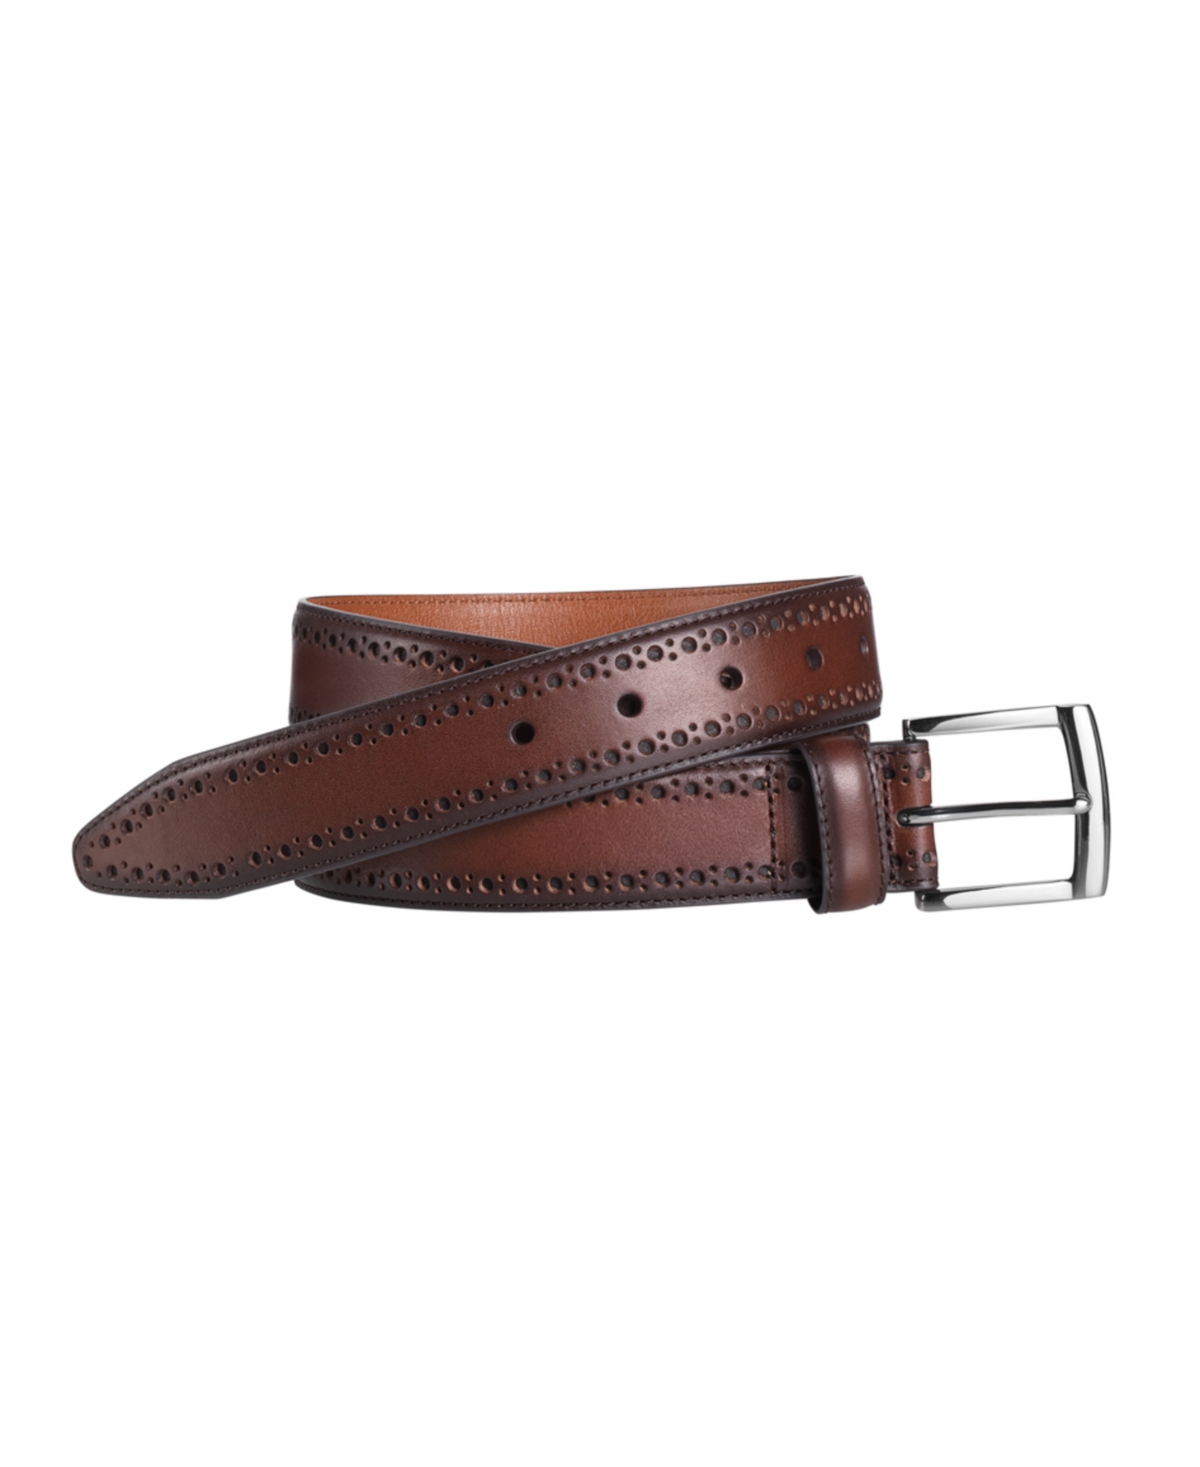 Johnston & Murphy Men's Perfed Edge Belt In Mahogany Leather